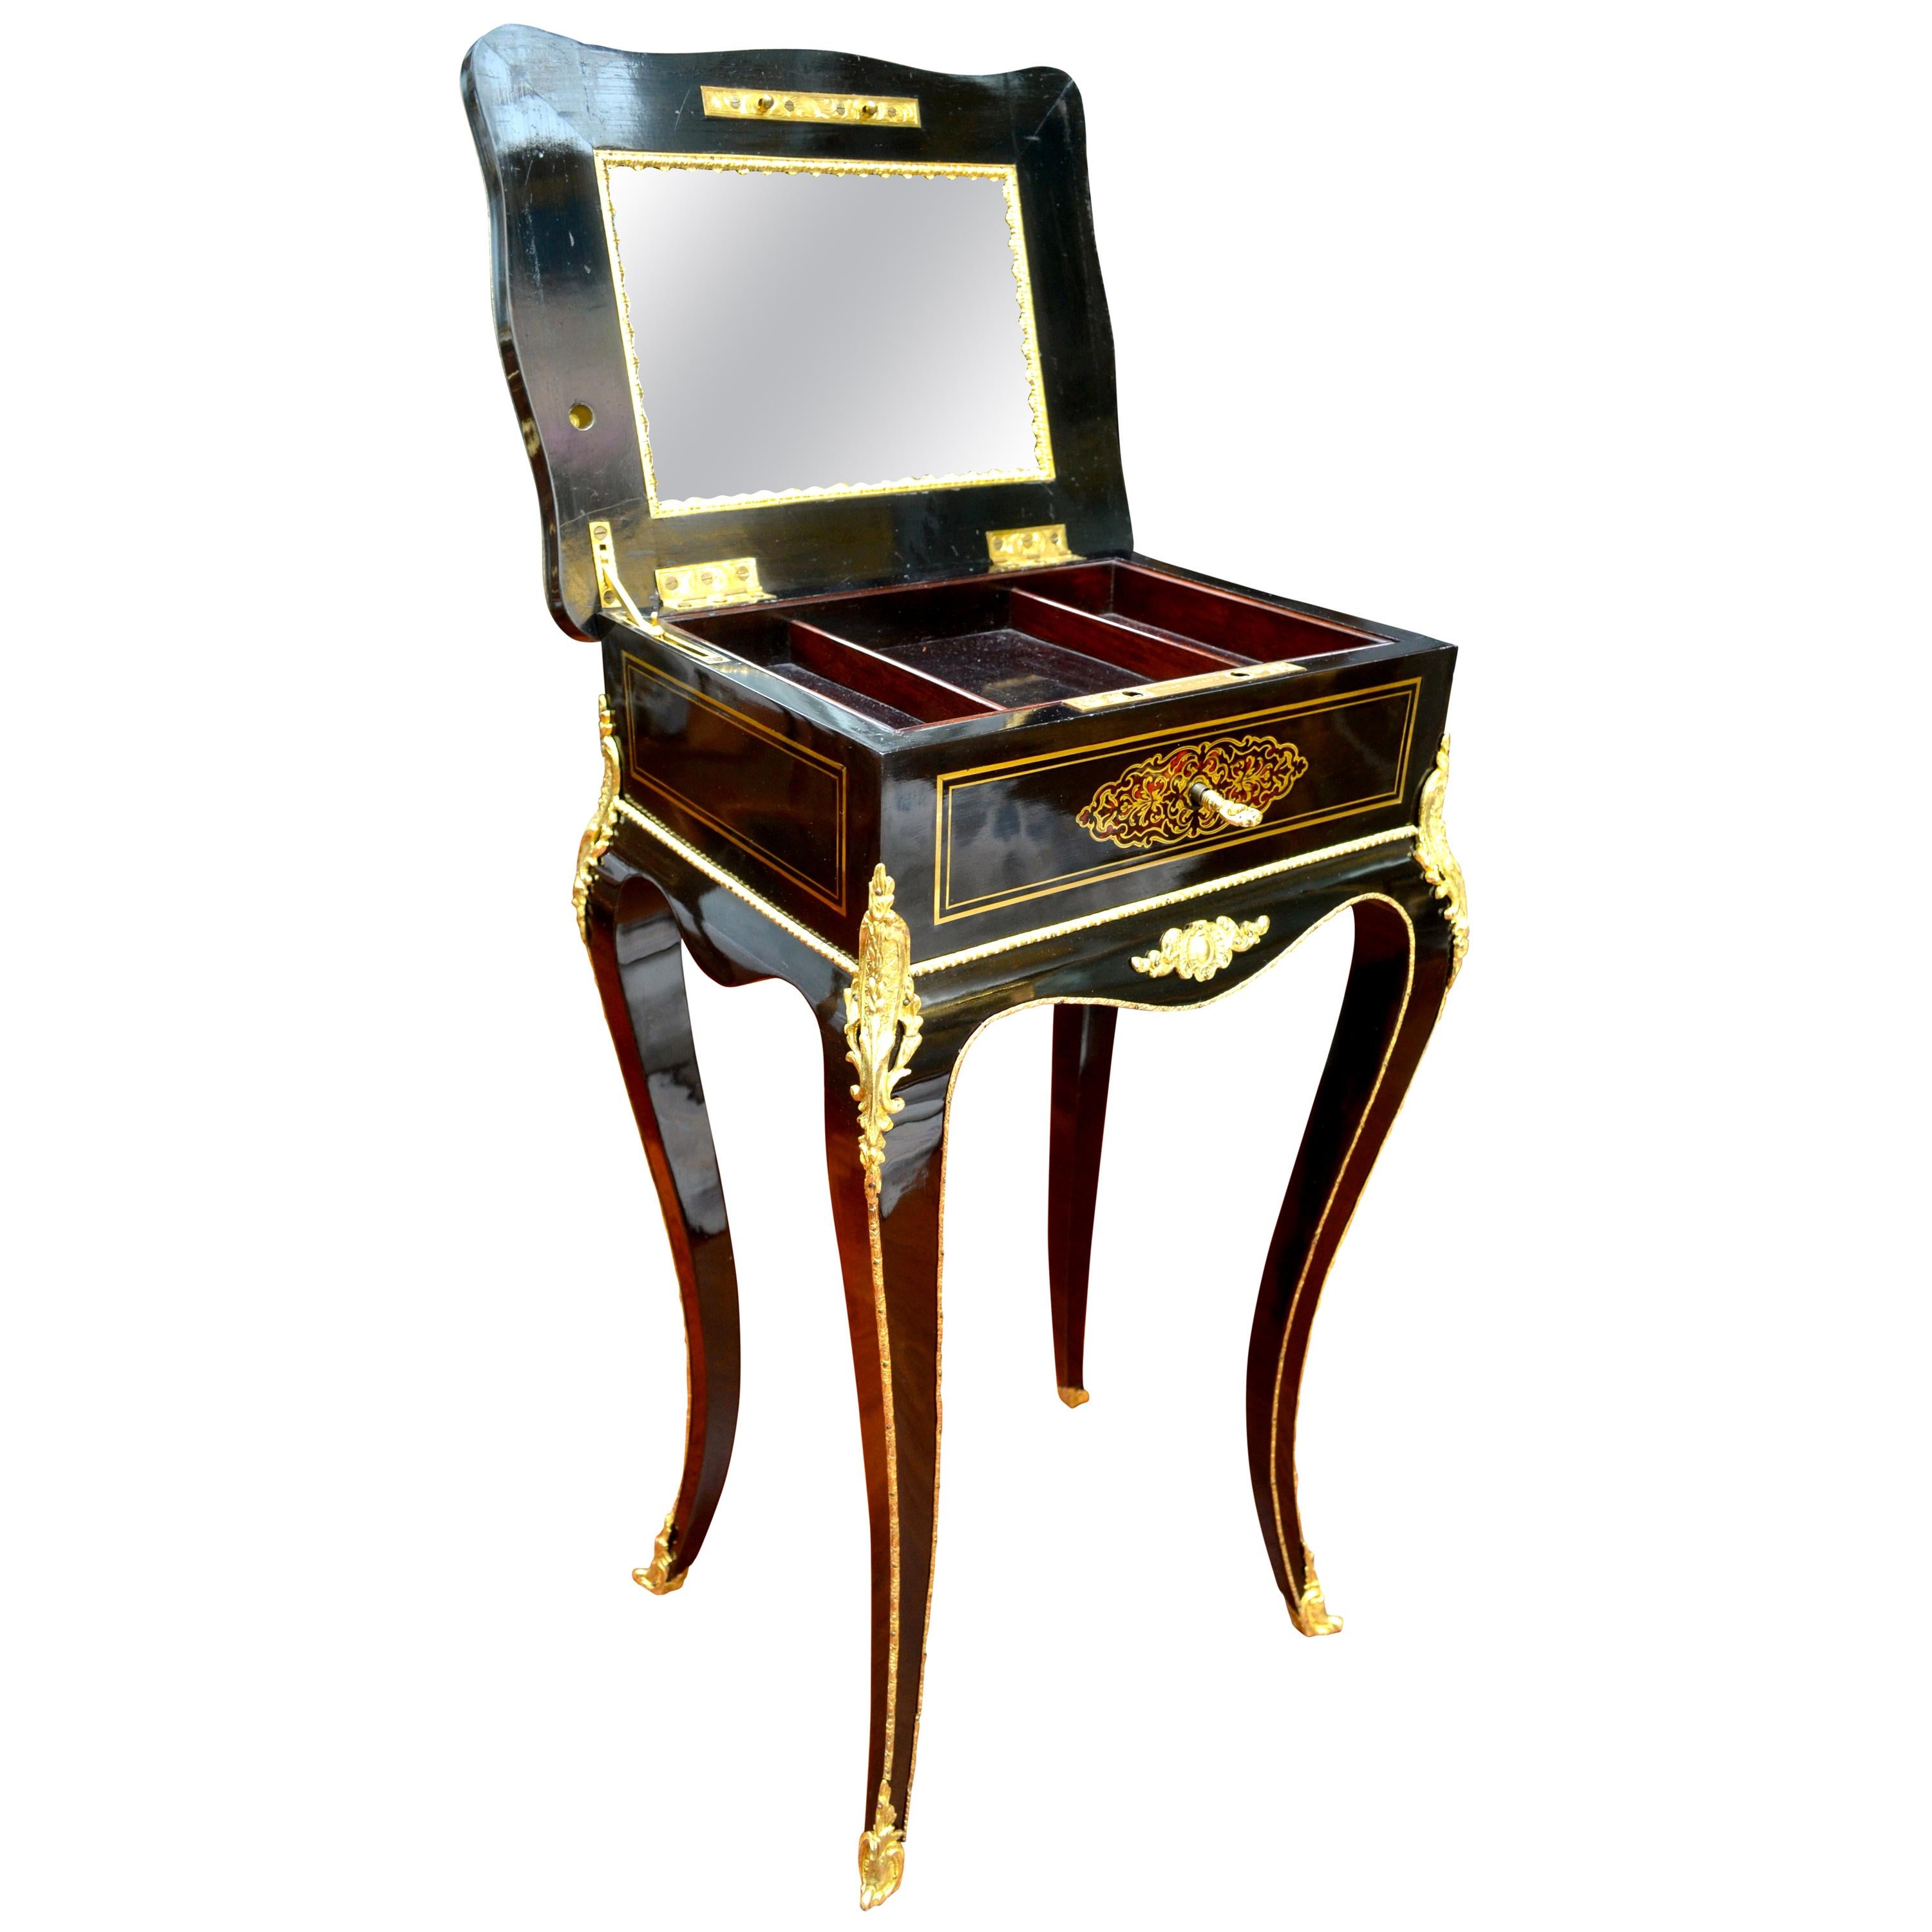 Napoleon III Ebonized Wood, Brass Inlay and Ormolu Jewelry Table by Tahan